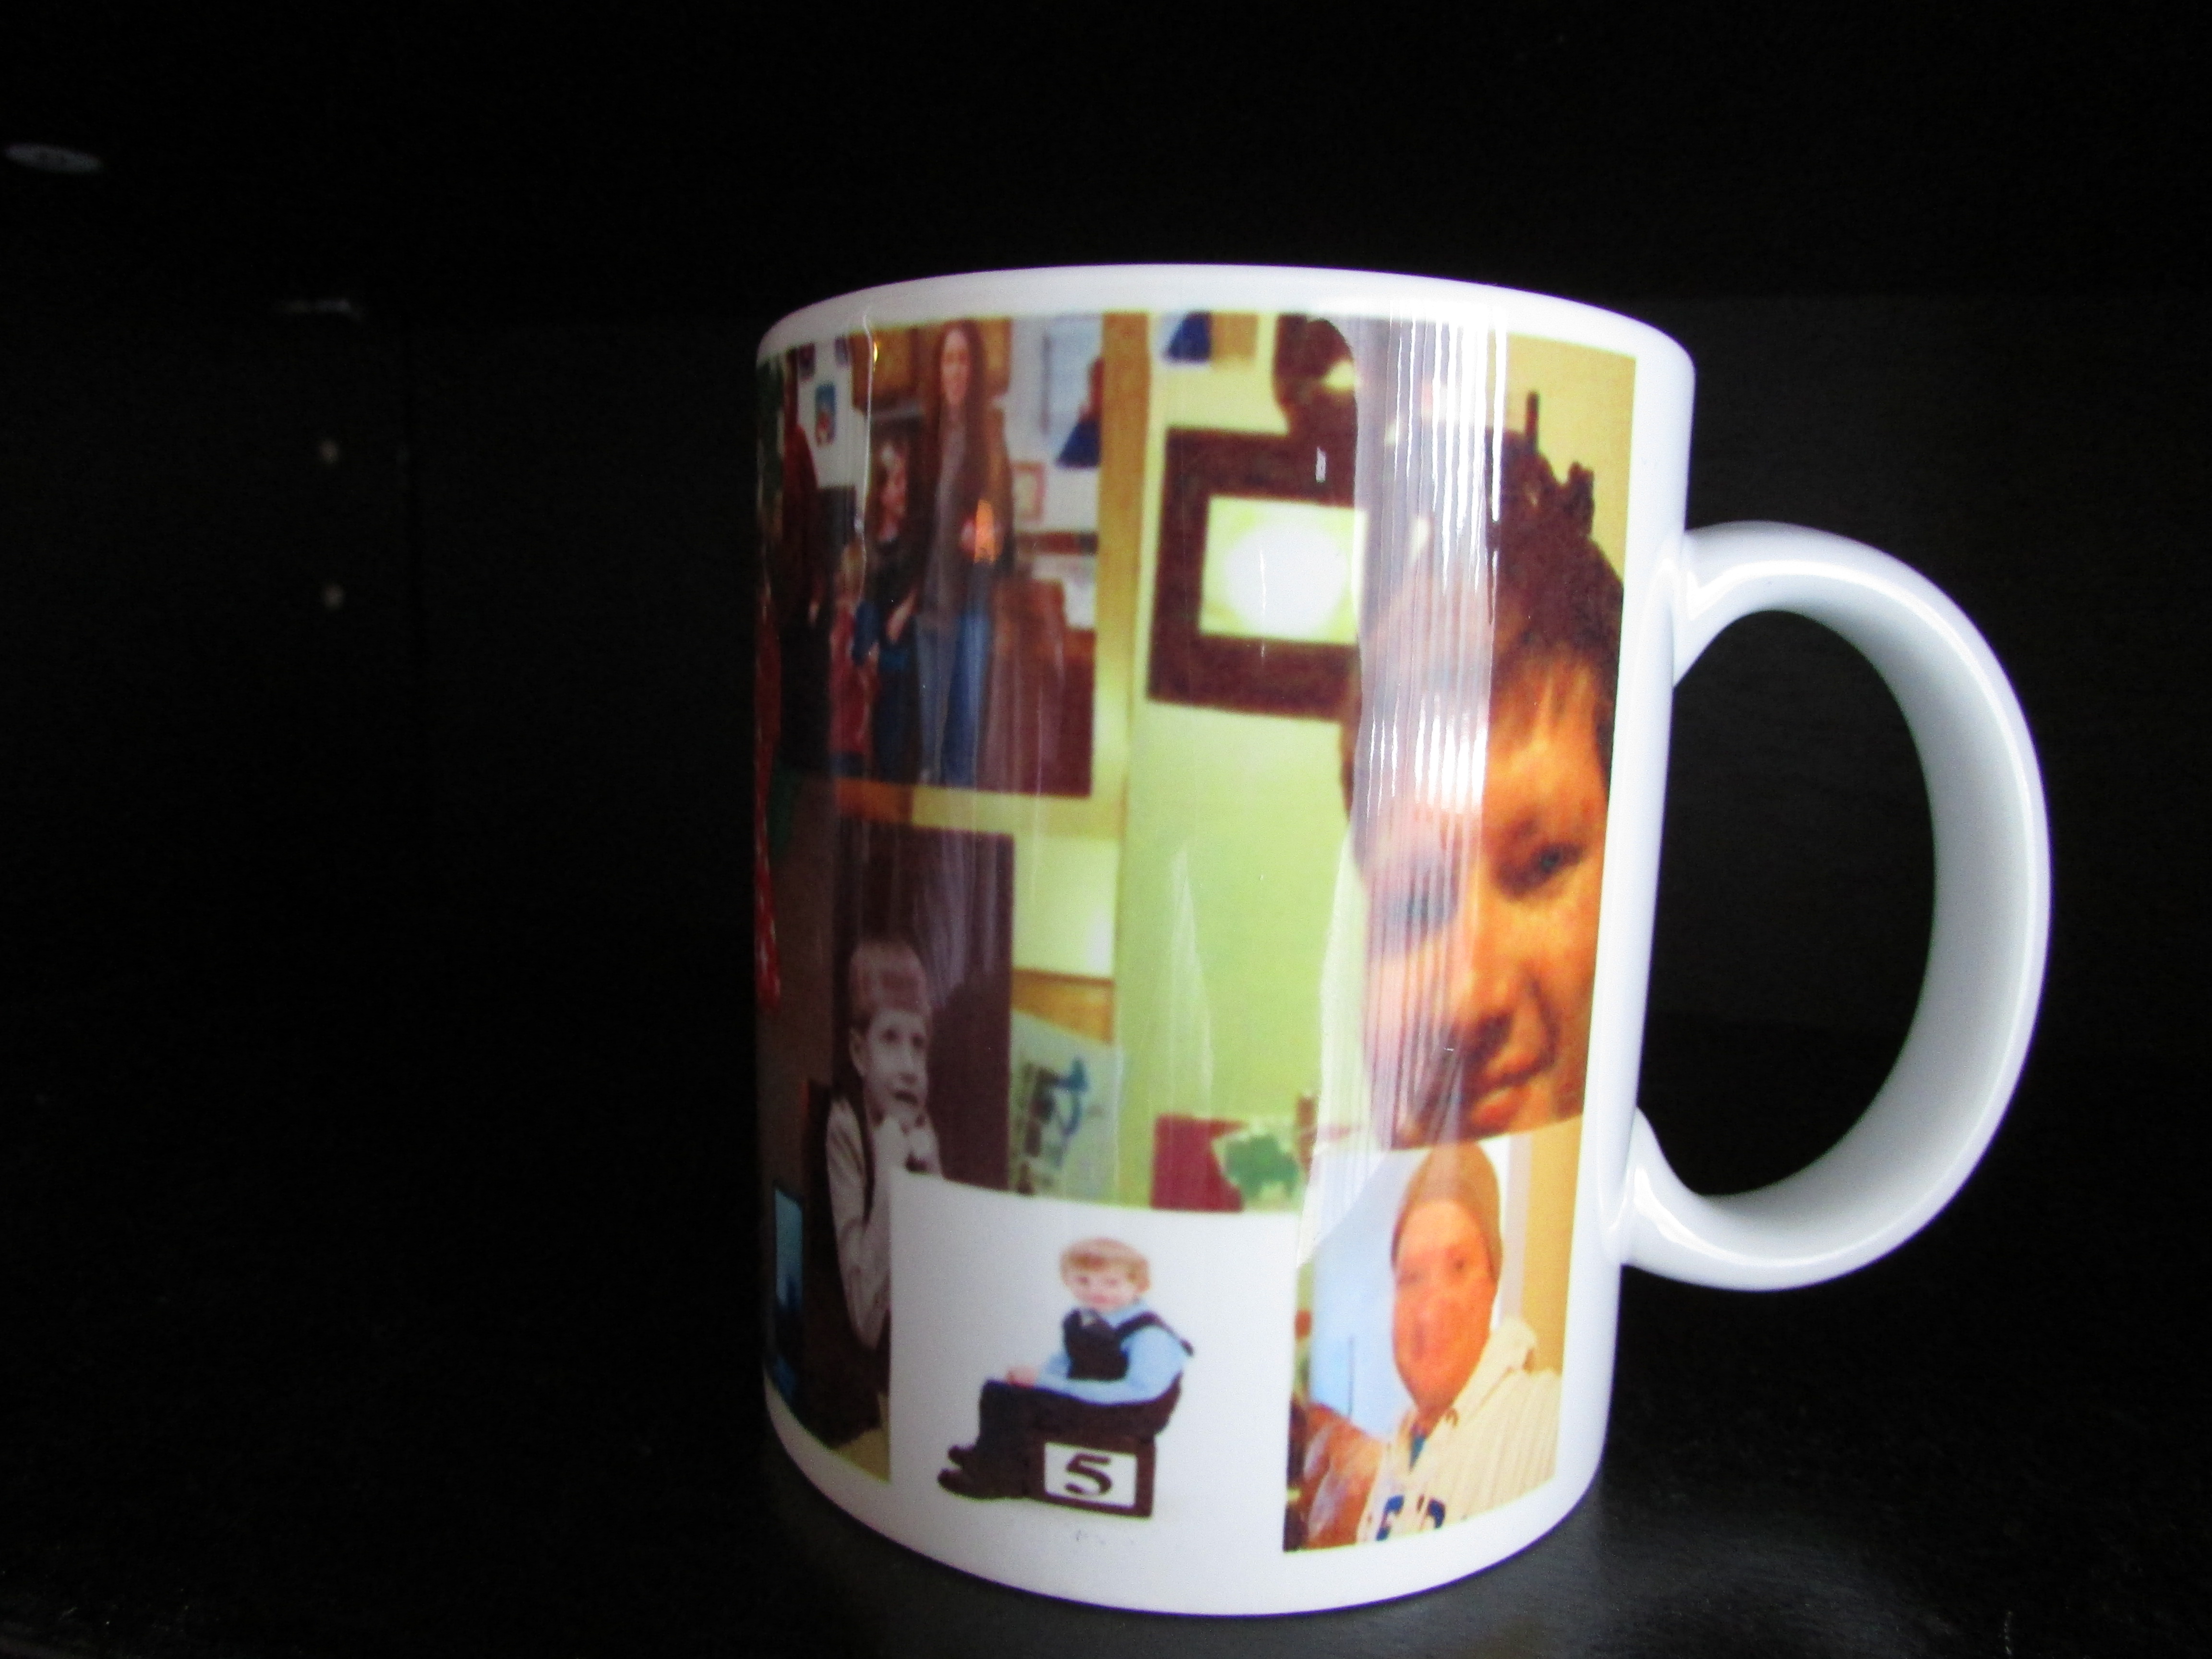 The Mug Boss made with sublimation printing